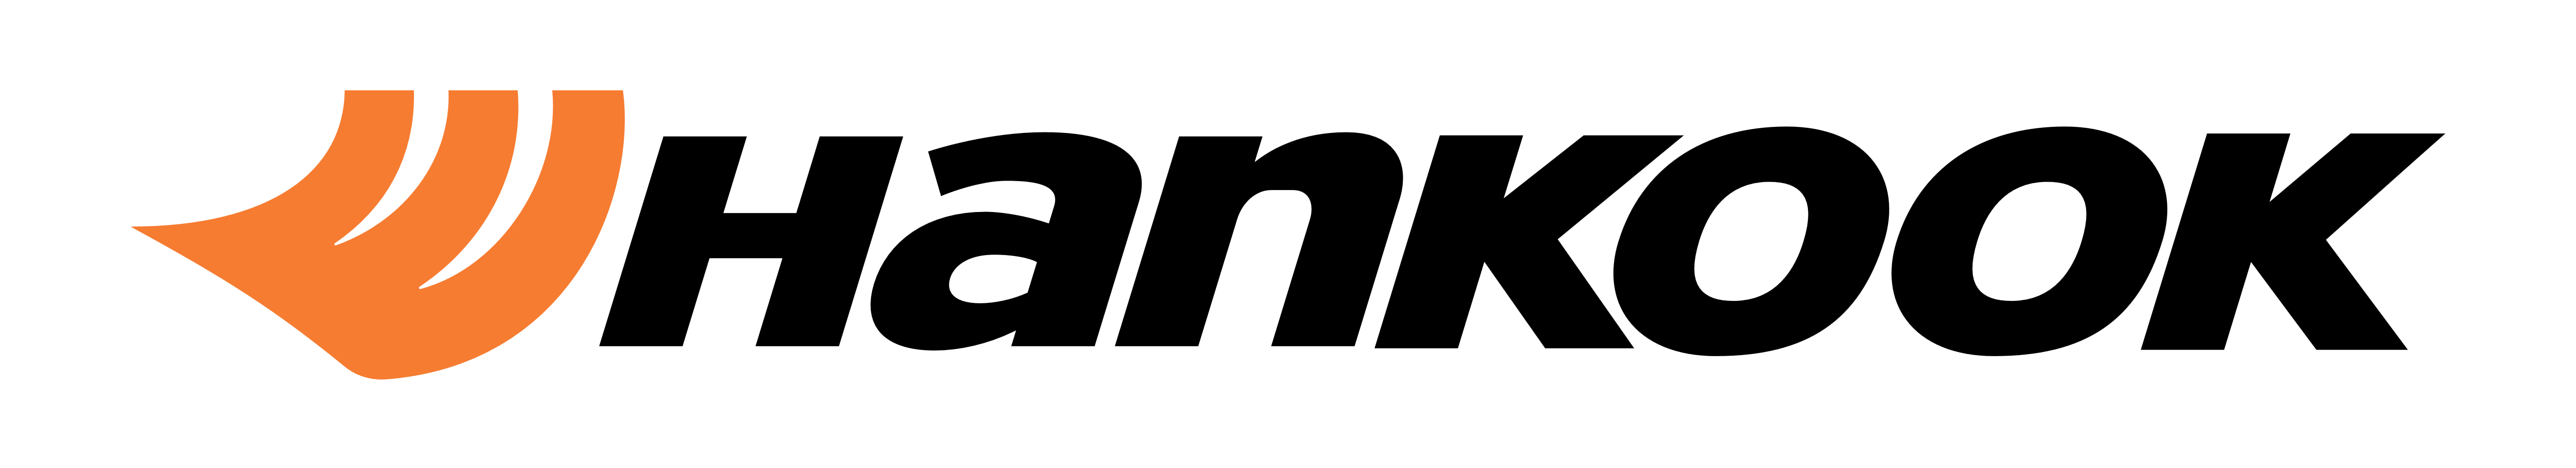 Hankook-logo-5500×1000